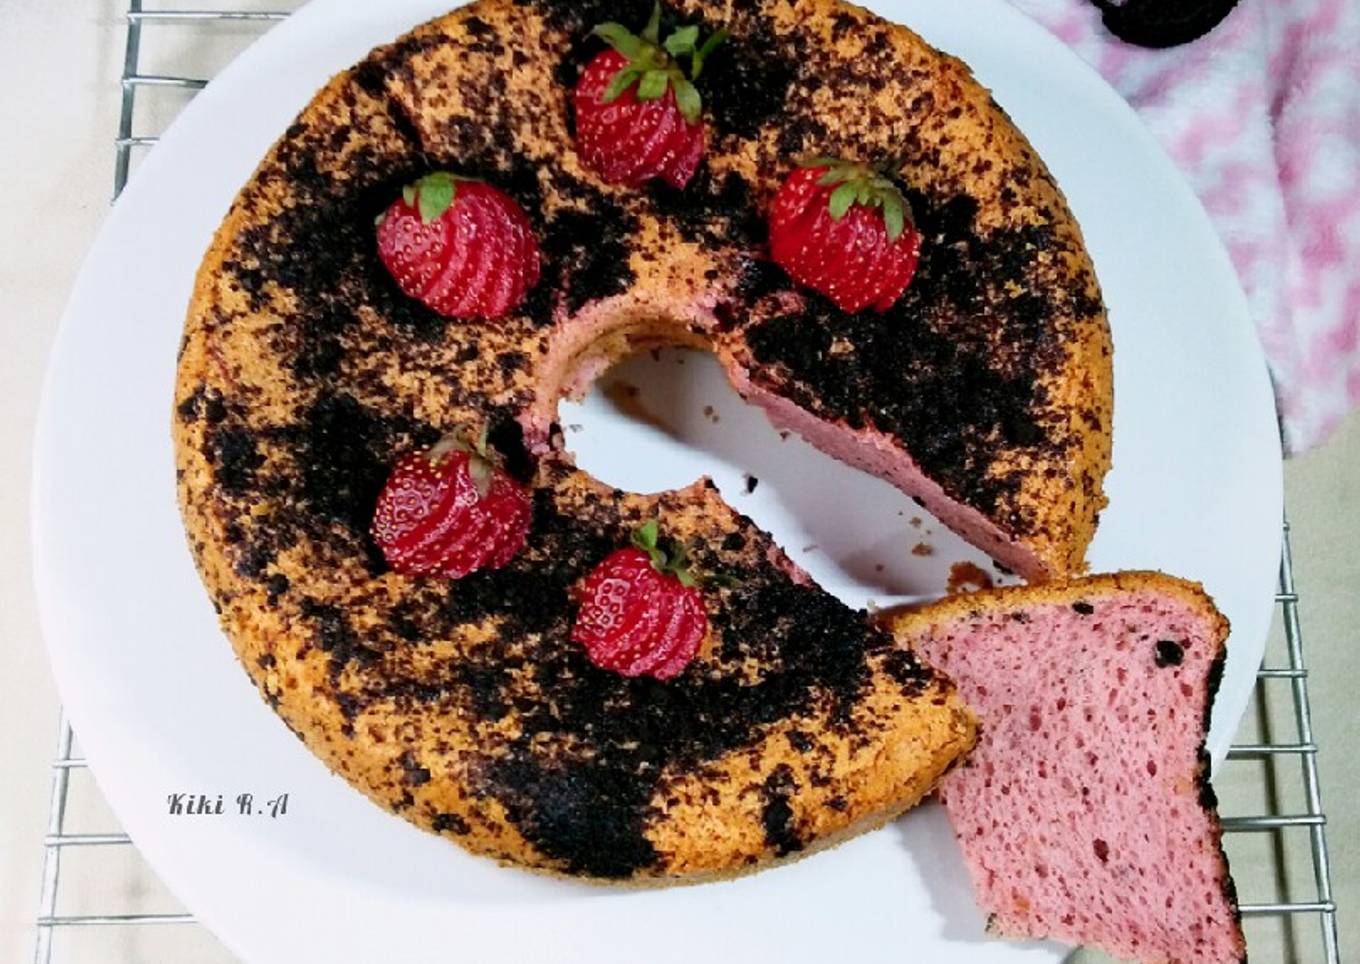 Strawberry Oreo Milk Chiffon Cake